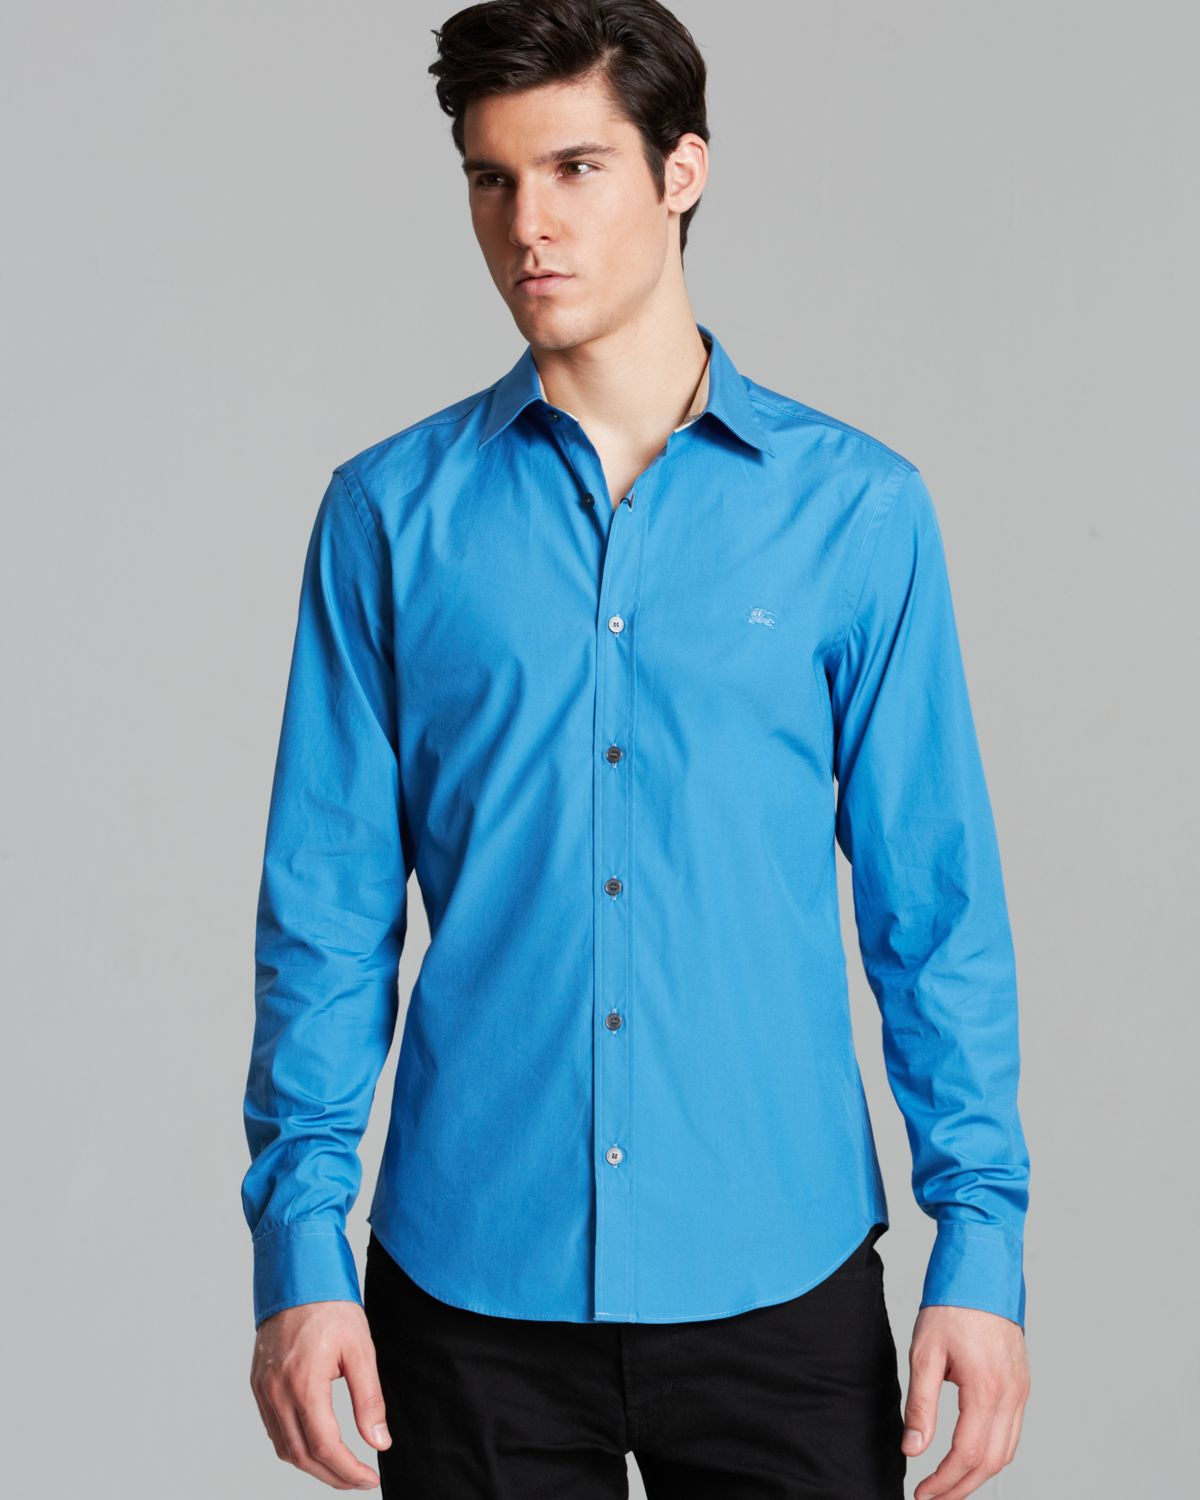 Lyst - Burberry Brit Henry Solid Sport Shirt Slim Fit in Blue for Men